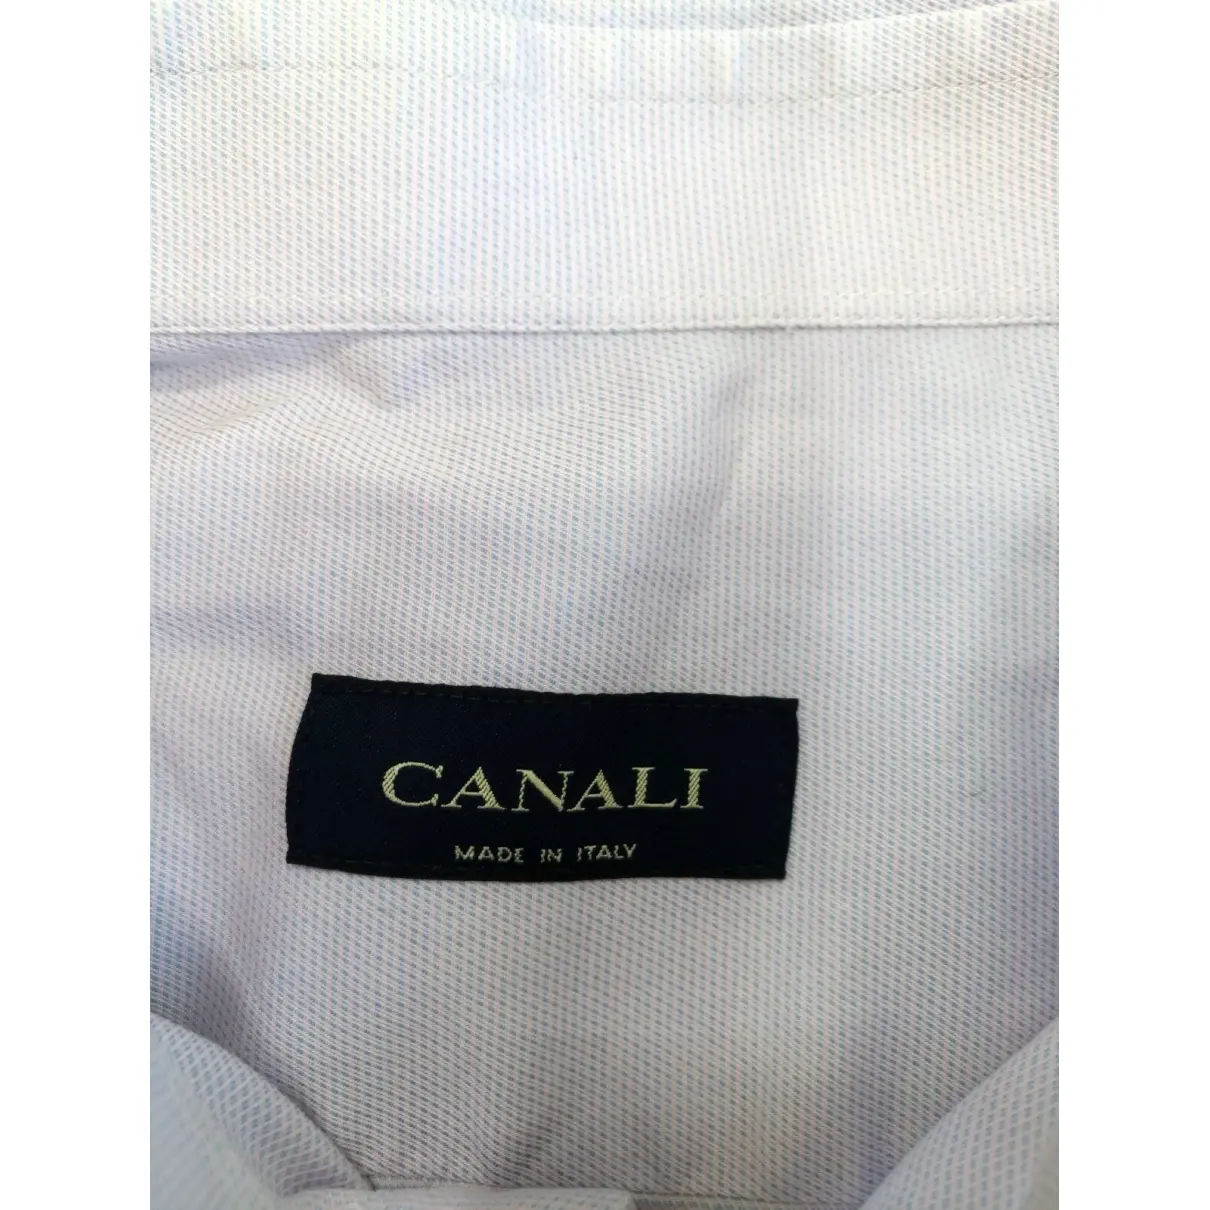 Luxury Canali Shirts Men - Vintage